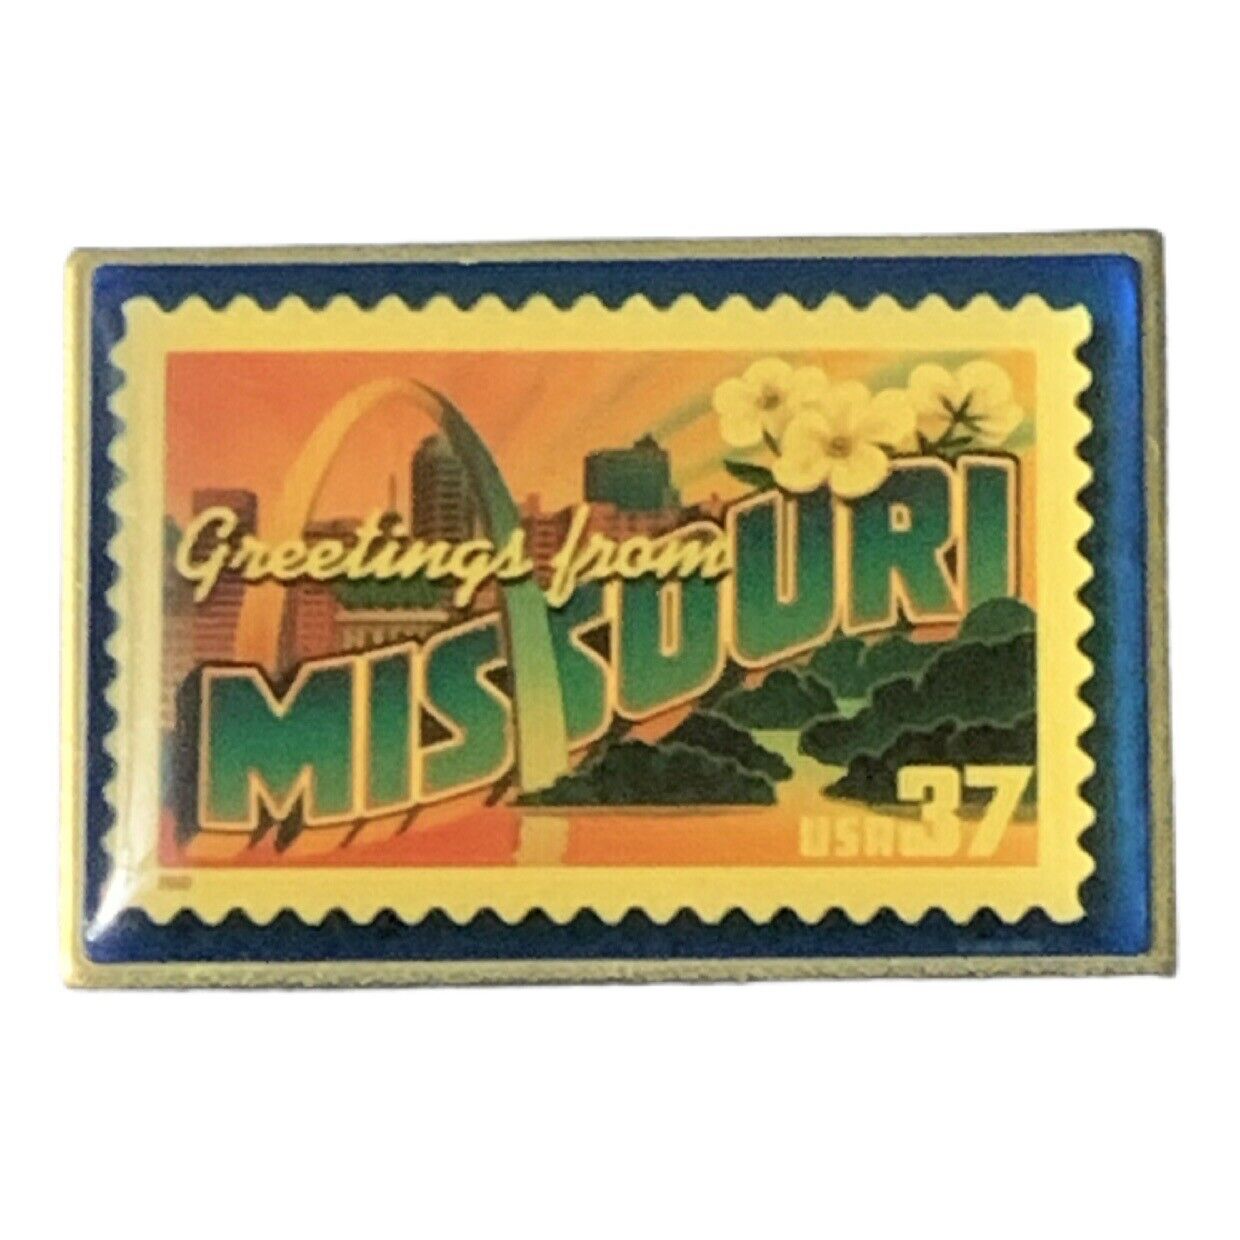 2001 USPS Greetings from Missouri USA 37c Stamp Travel Souvenir Pin